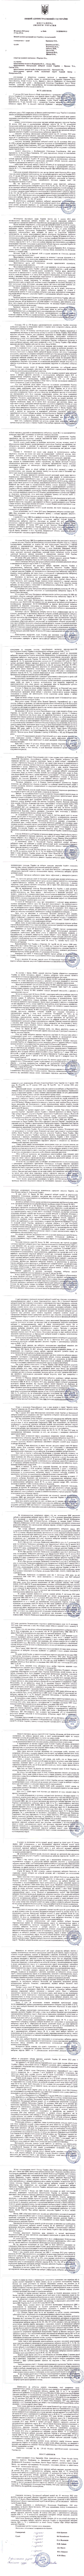 Постанова ВАСУ про позбавлення Павла Балоги депутатських повноважень (документ)